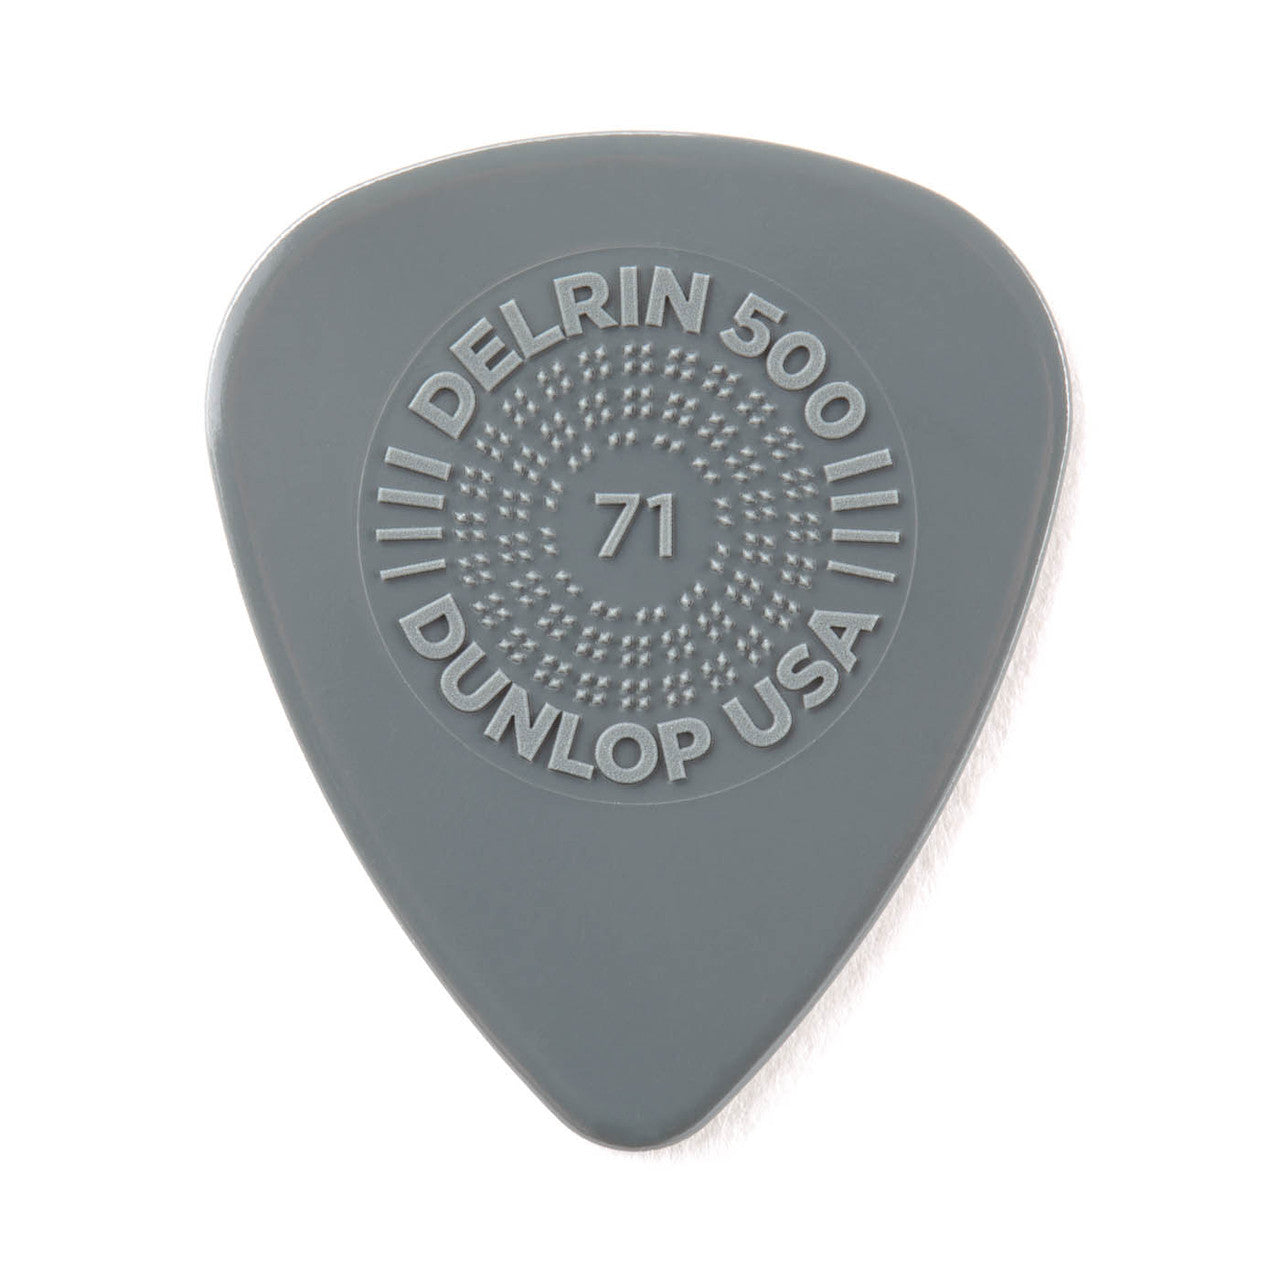 Dunlop Primegrip® Delrin 500 Pick .71mm